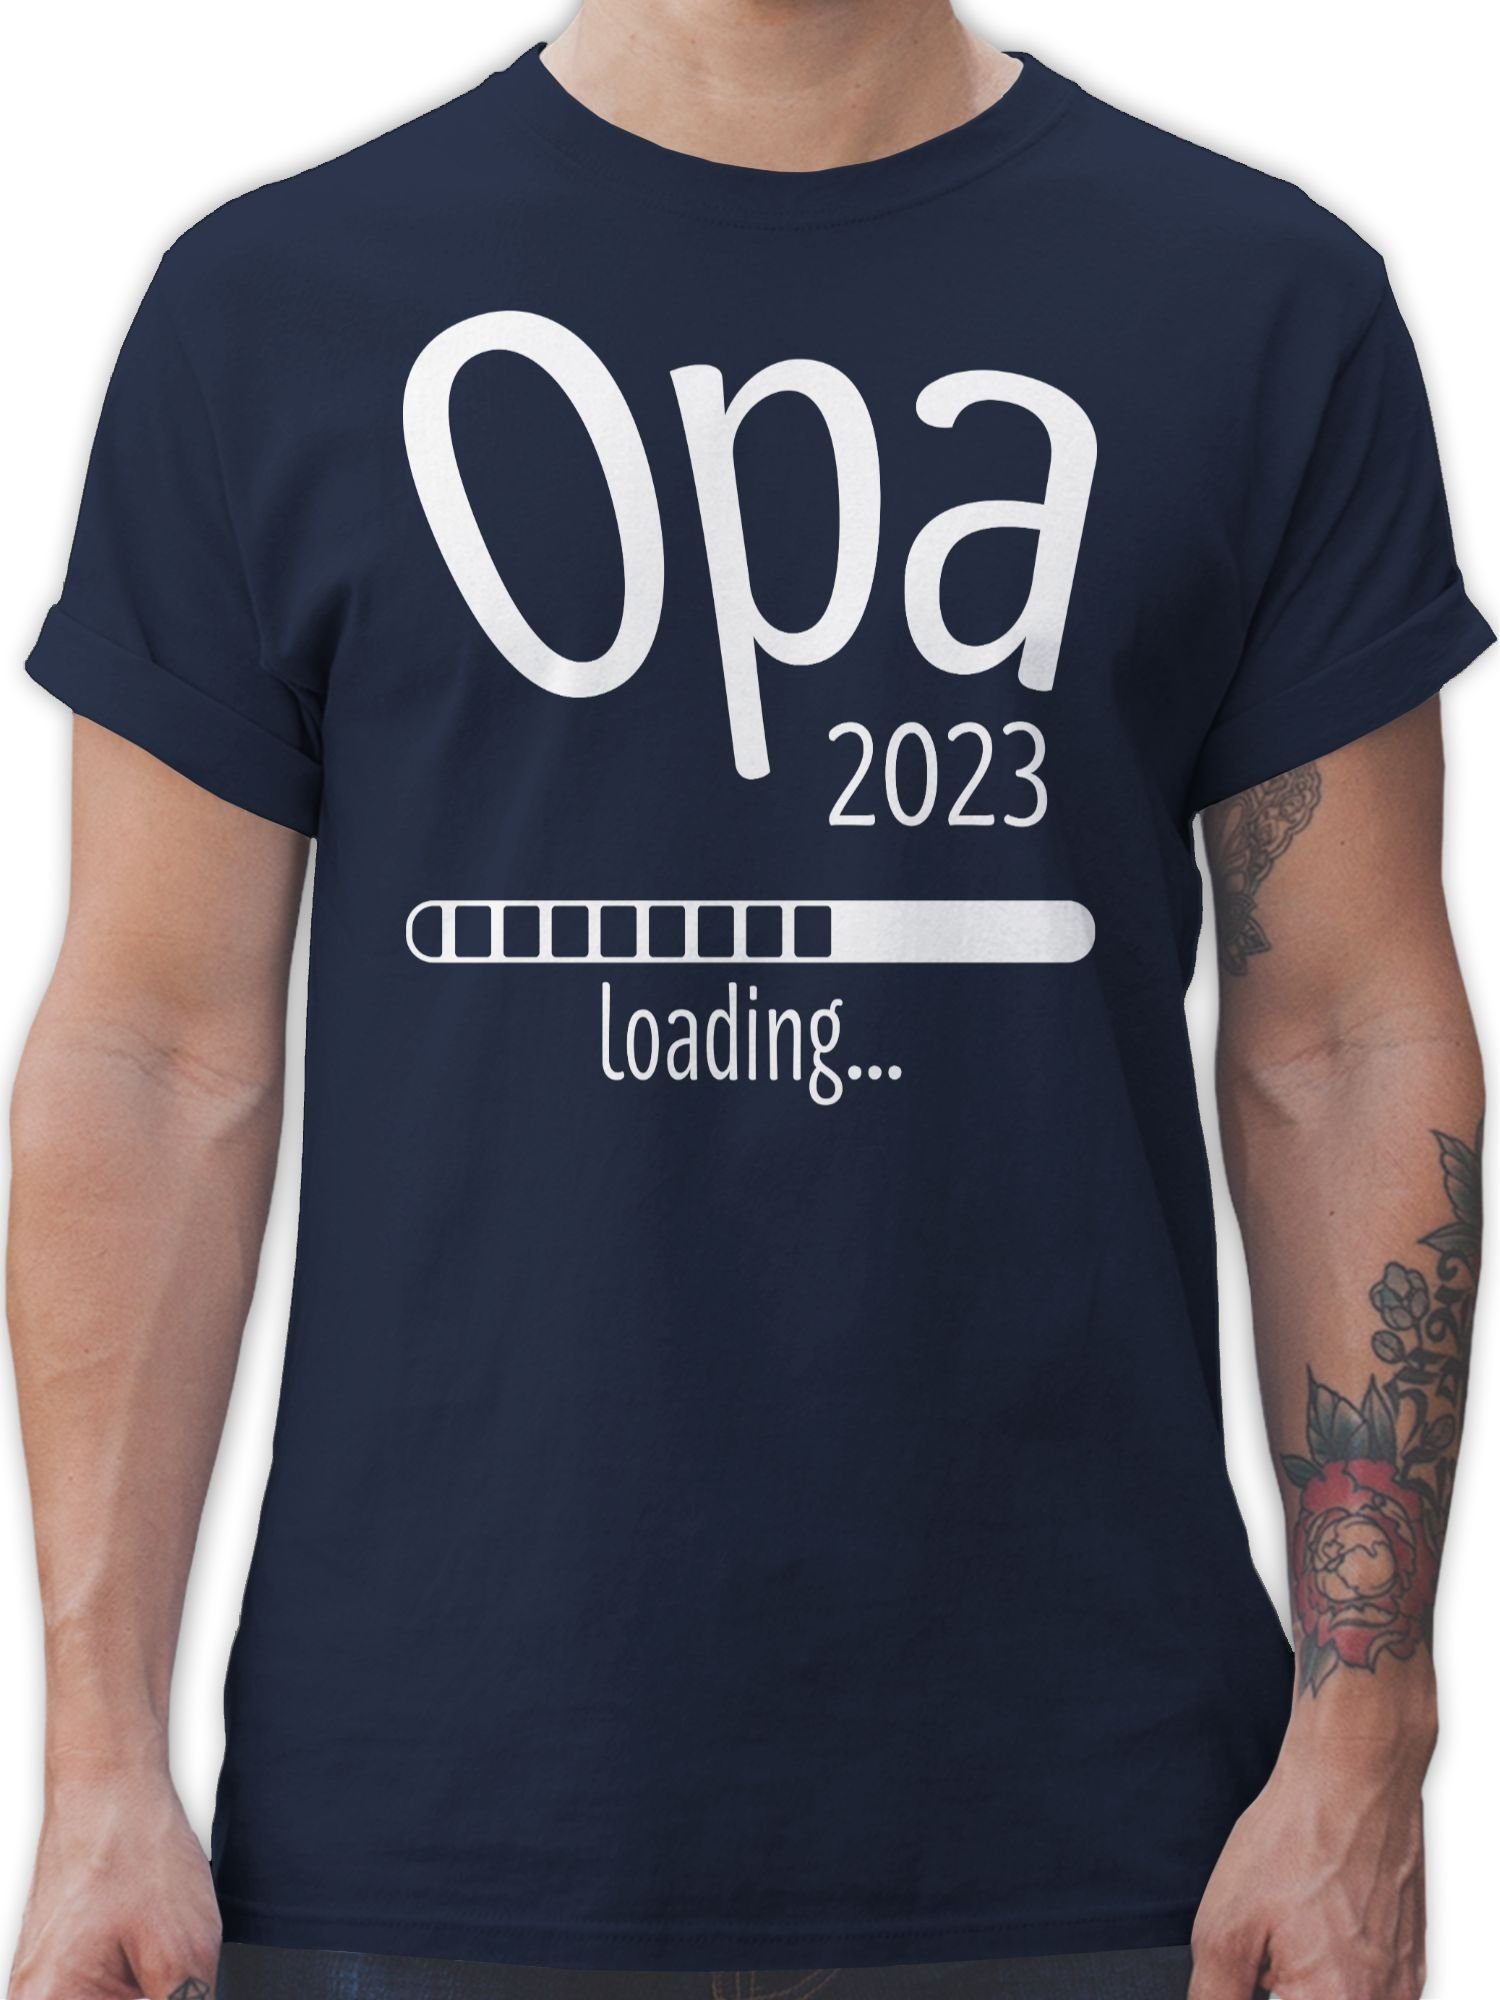 Shirtracer T-Shirt Opa Blau 2 Geschenke Navy loading 2023 Opa